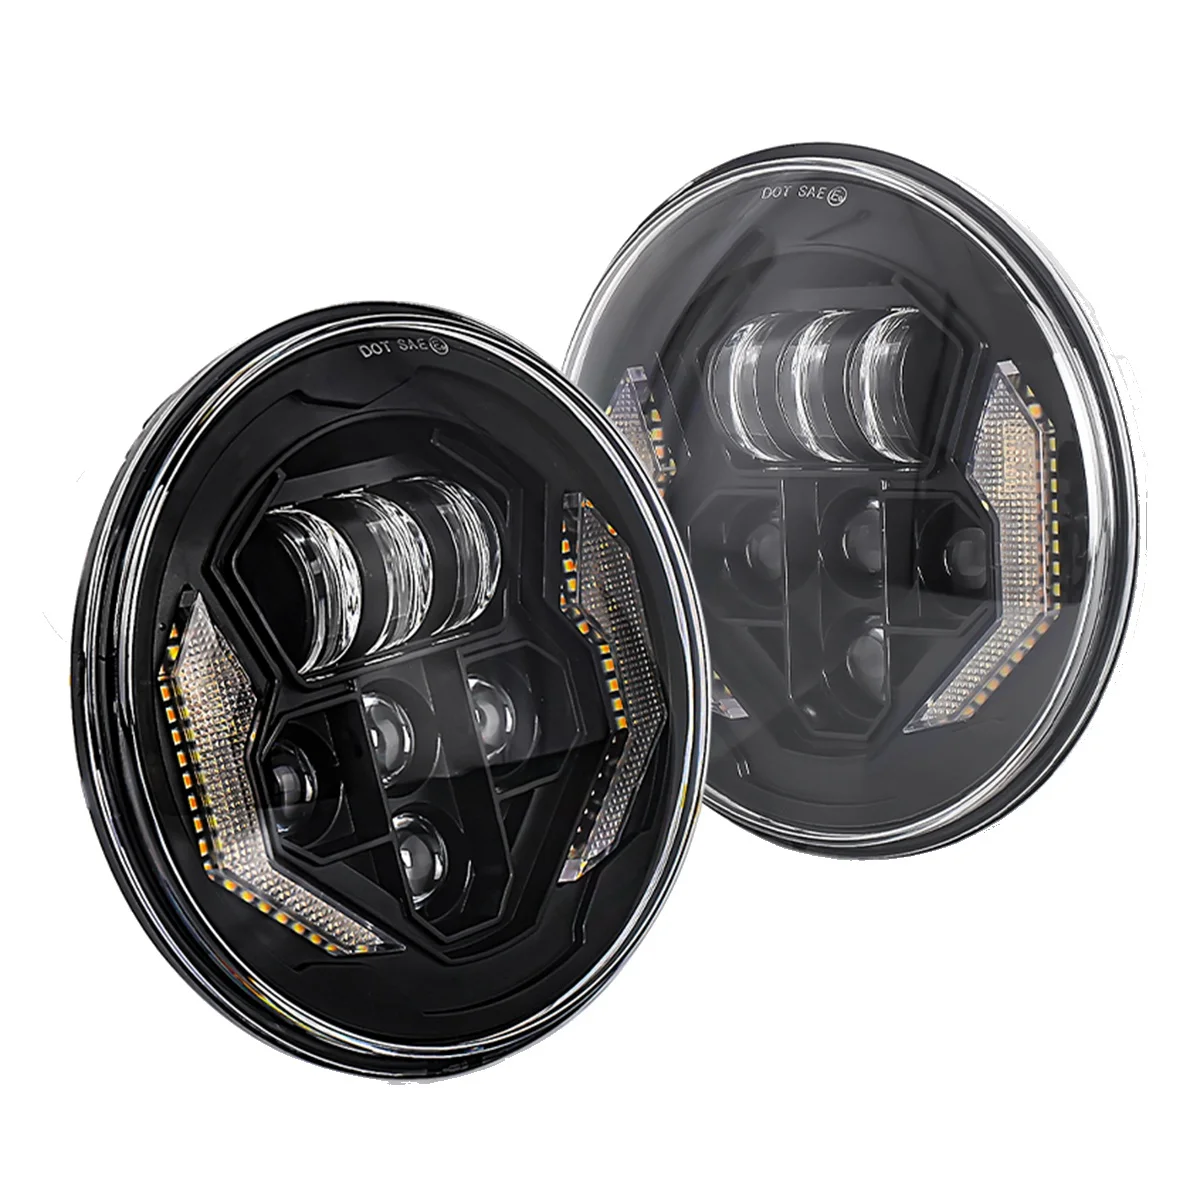 

7 Inch LED Headlights 1 Set with High Low Beam White DRL Amber Turn Signal for -Jeep-Wrangler JK TJ CJ LJ